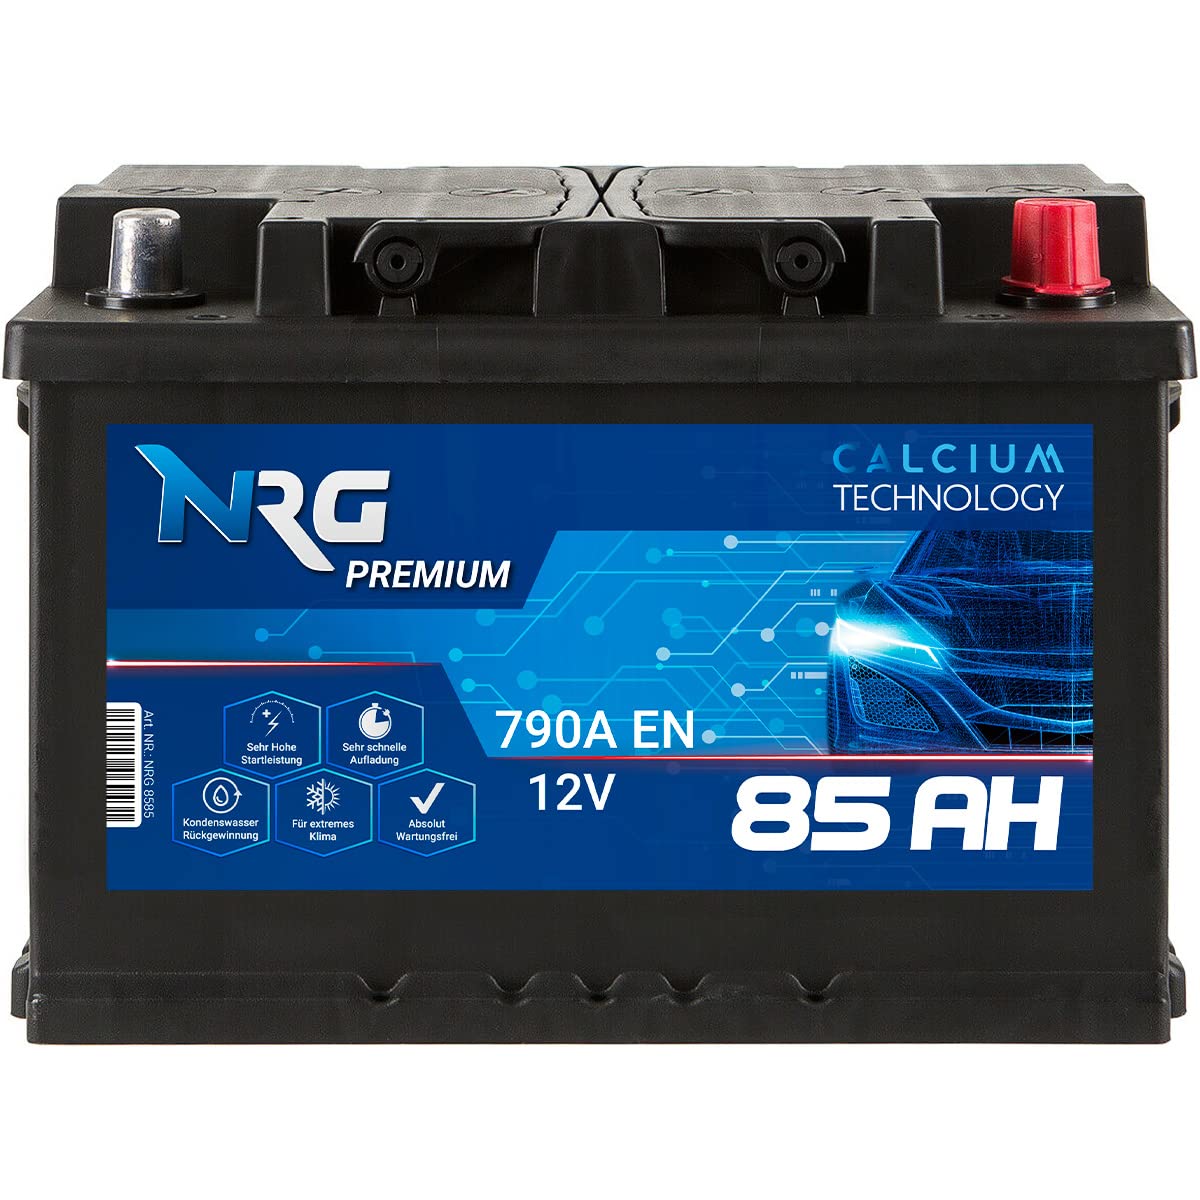 NRG Premium Autobatterie 12V 85AH 790A/EN Batterie ersetzt 74AH 75AH 77AH 80AH 82AH 83AH von NRG PREMIUM